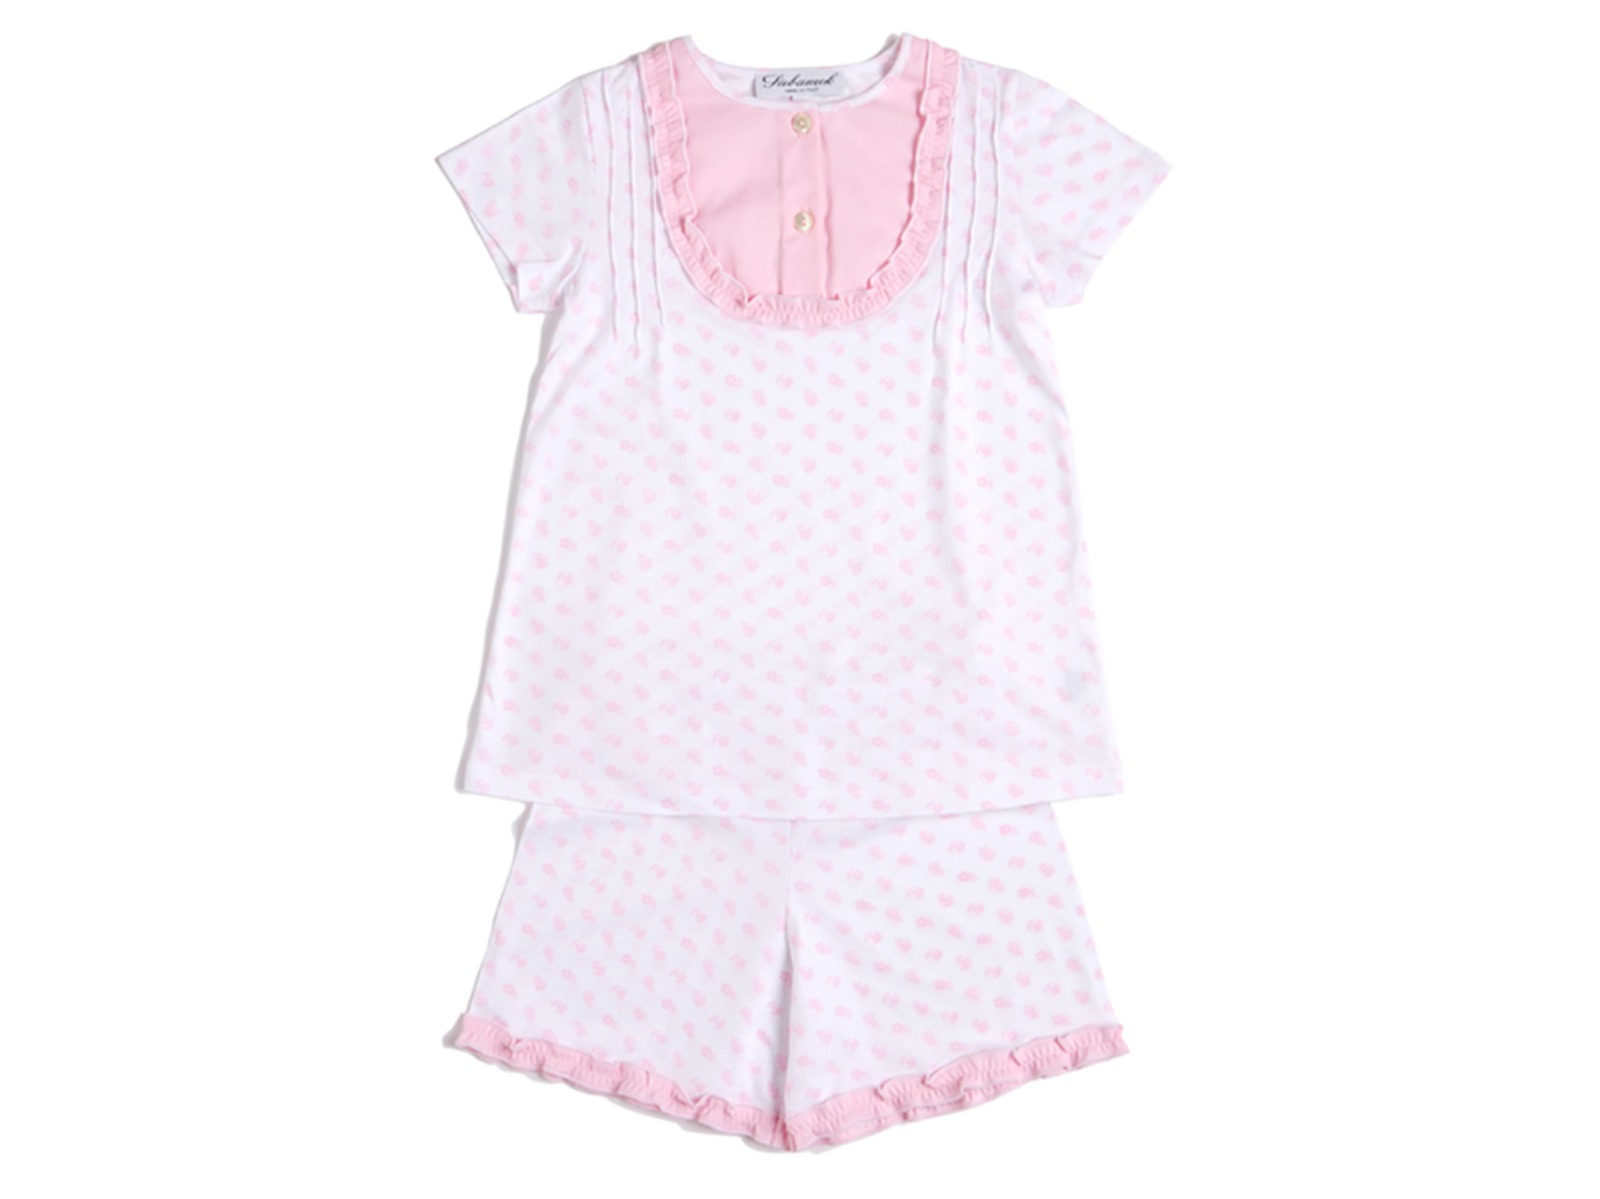 Siebaneck, i pigiami artigianali italiani: - Bimba - mod. 23dav bianco/rosa